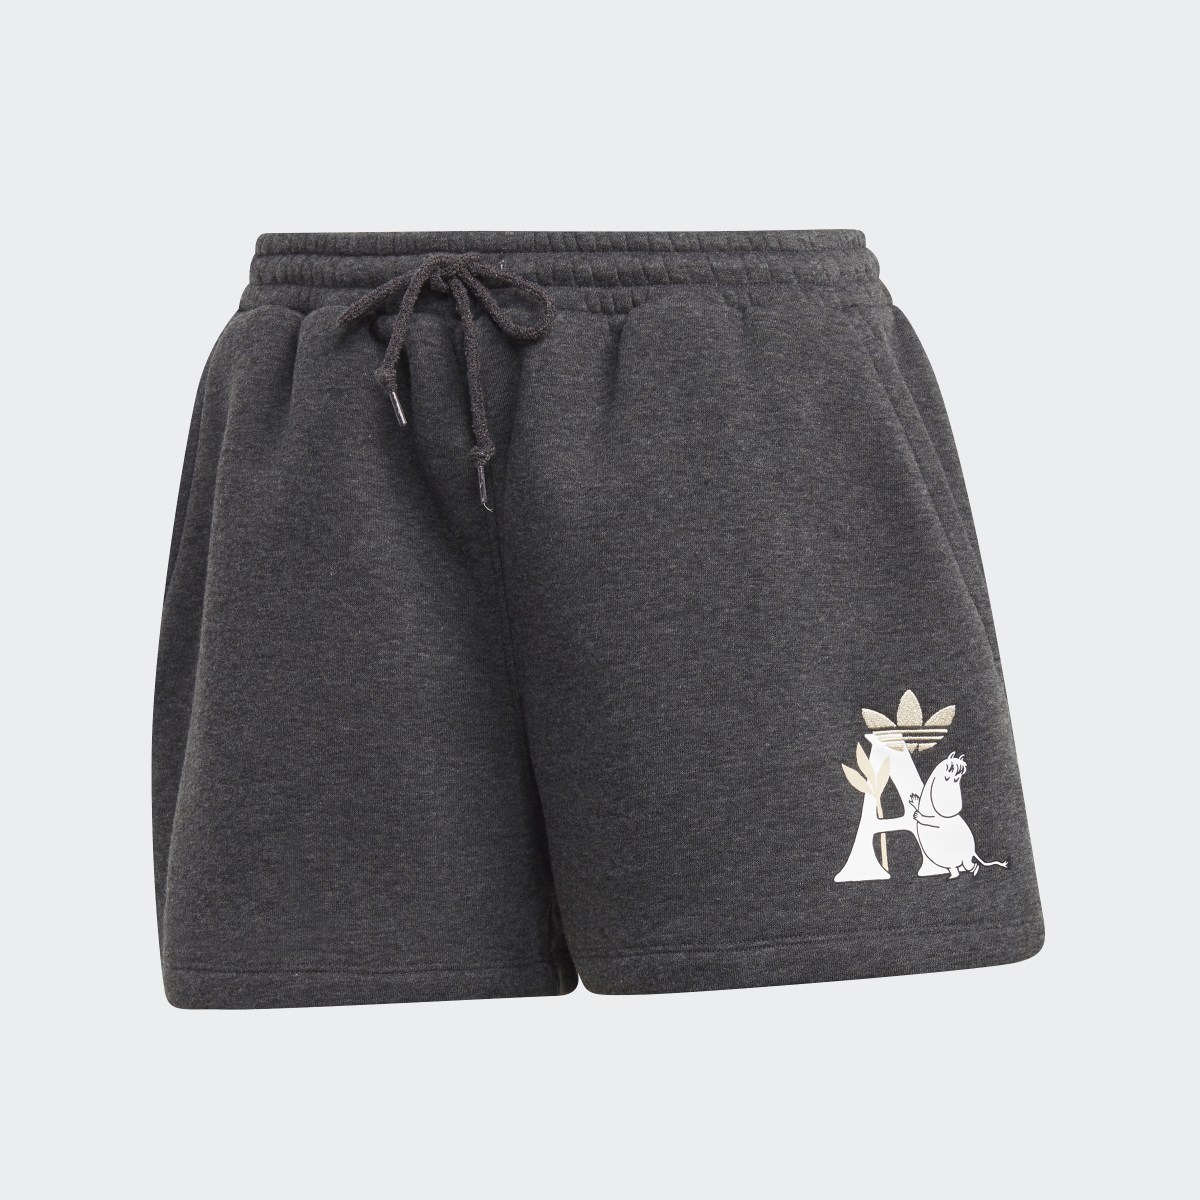 Adidas Originals x Moomin Sweat Shorts. 4